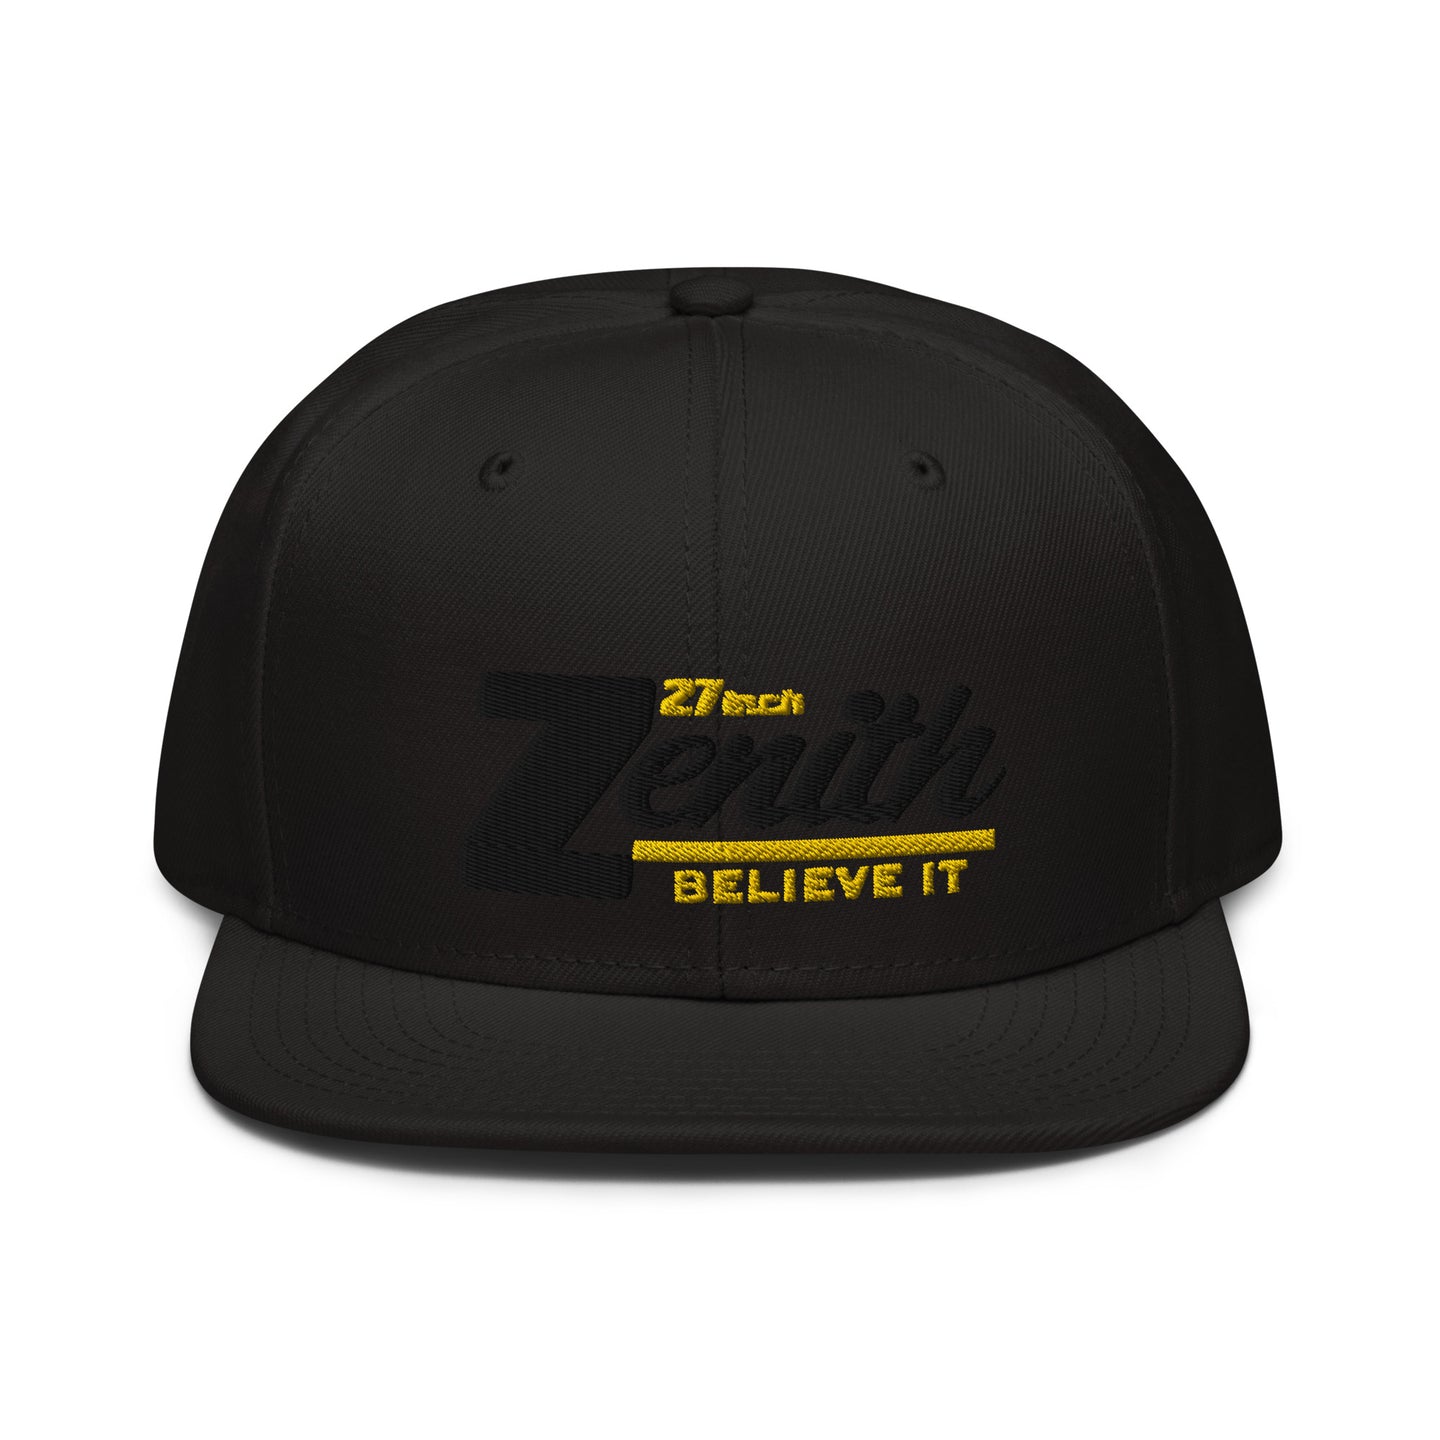 Tinfoil 27 Inch Zenith Snapback Hat